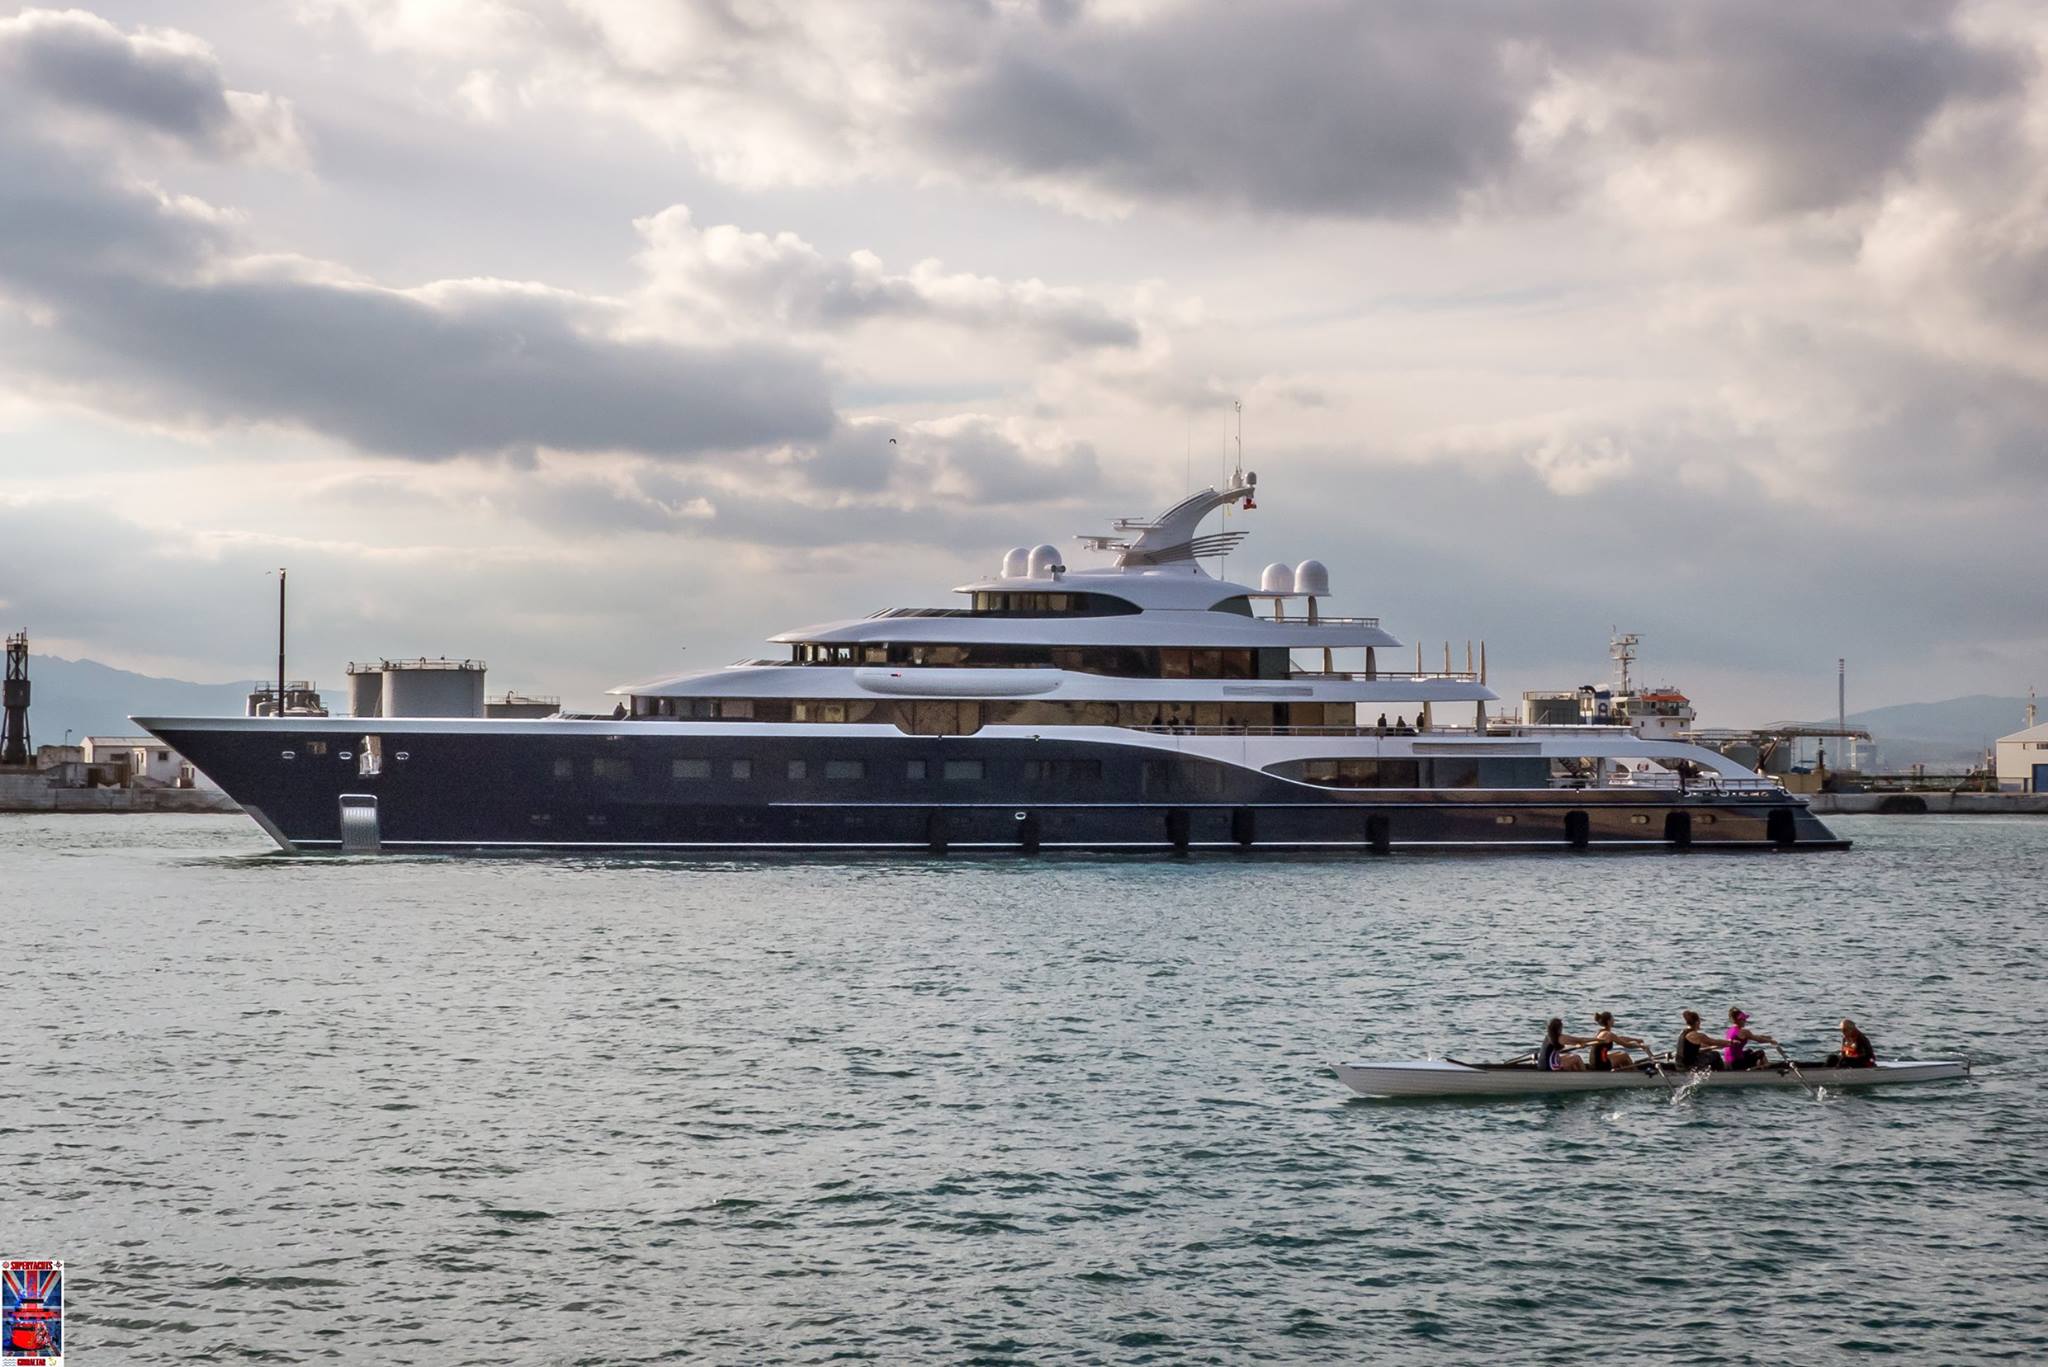 SYMPHONY yacht (Feadship, 101.5m, 2015)